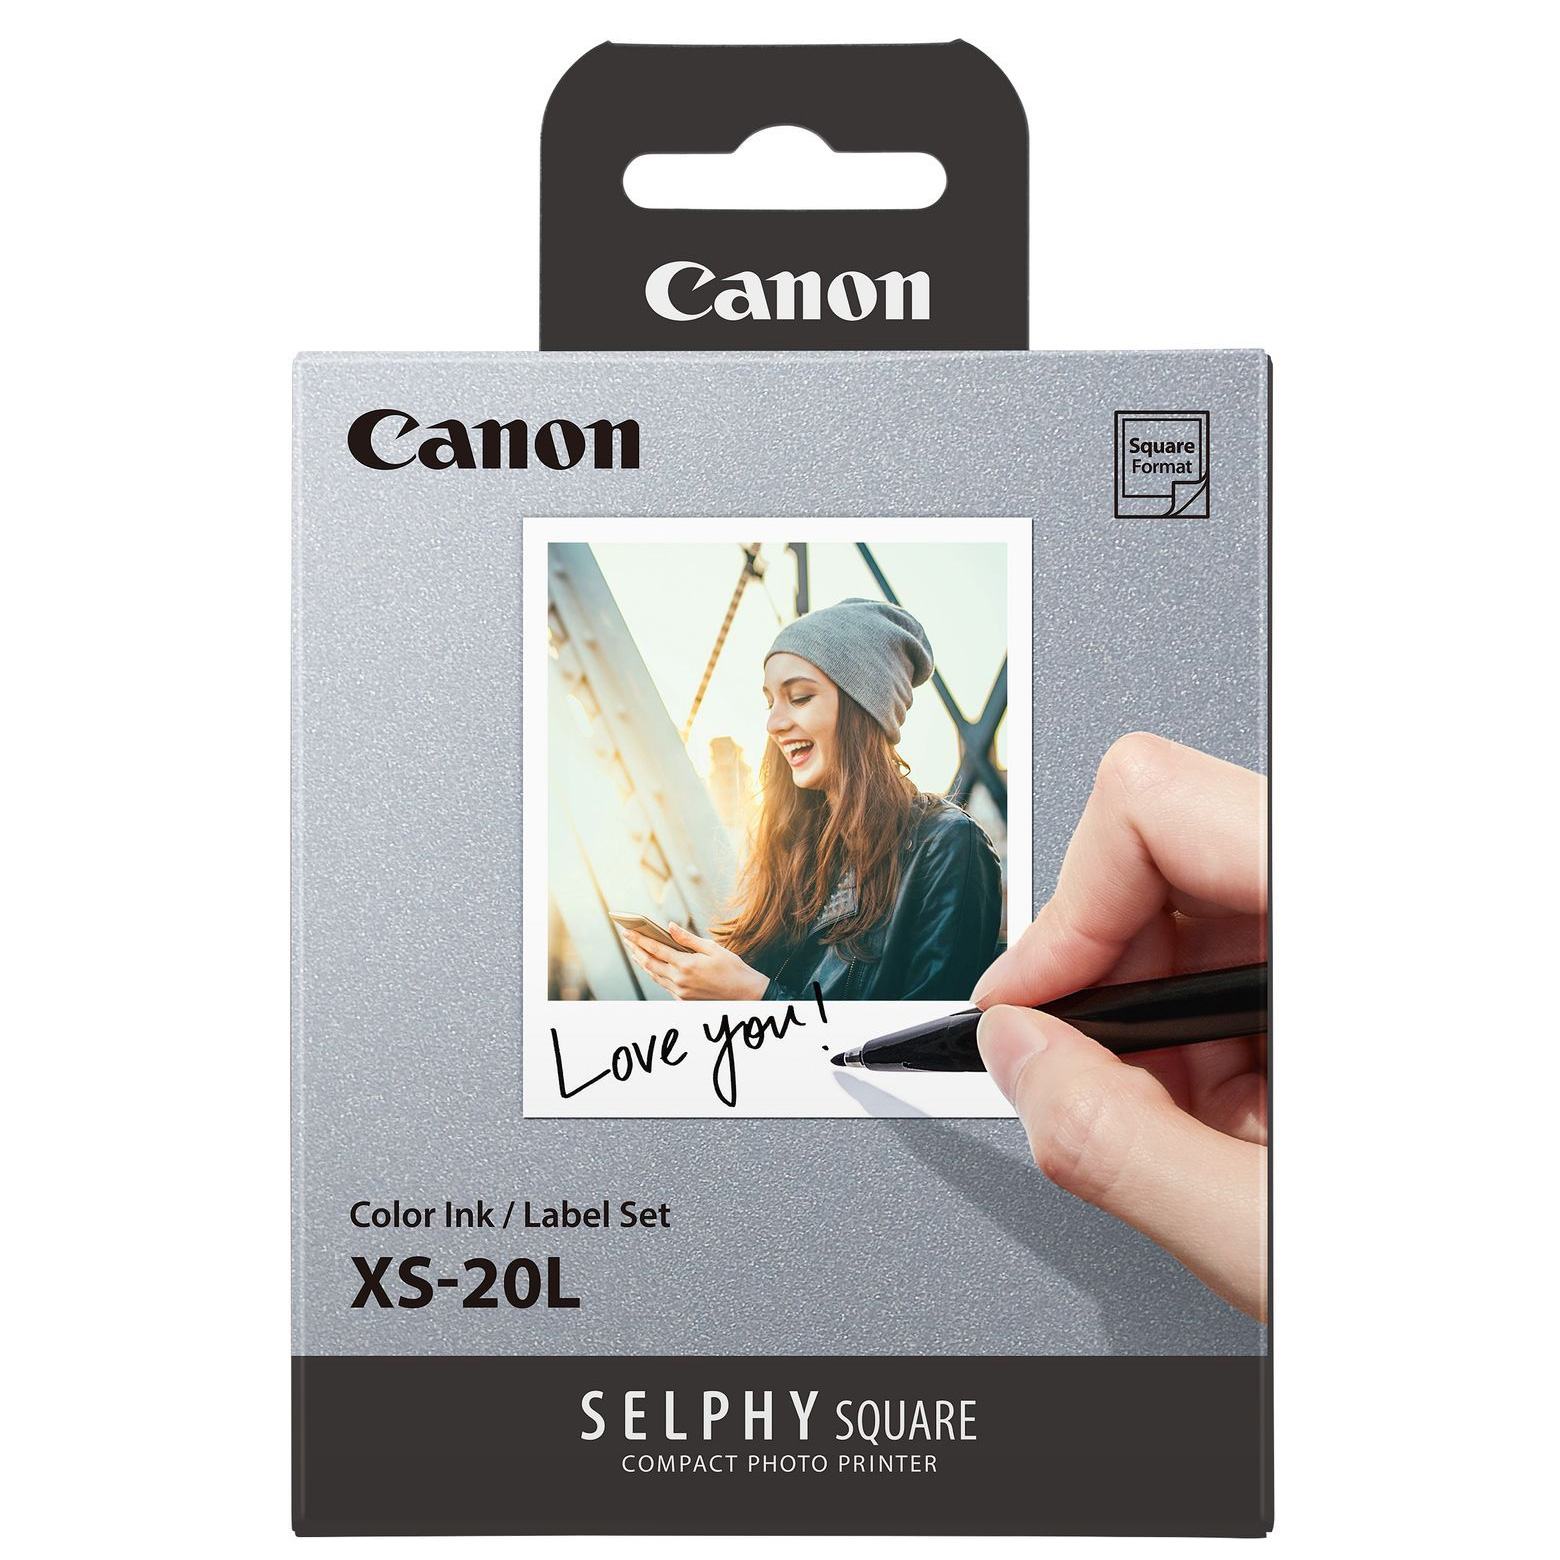 Original Canon XS-20L Ink & Photo Paper Set - 20 Sheets (4119C002)